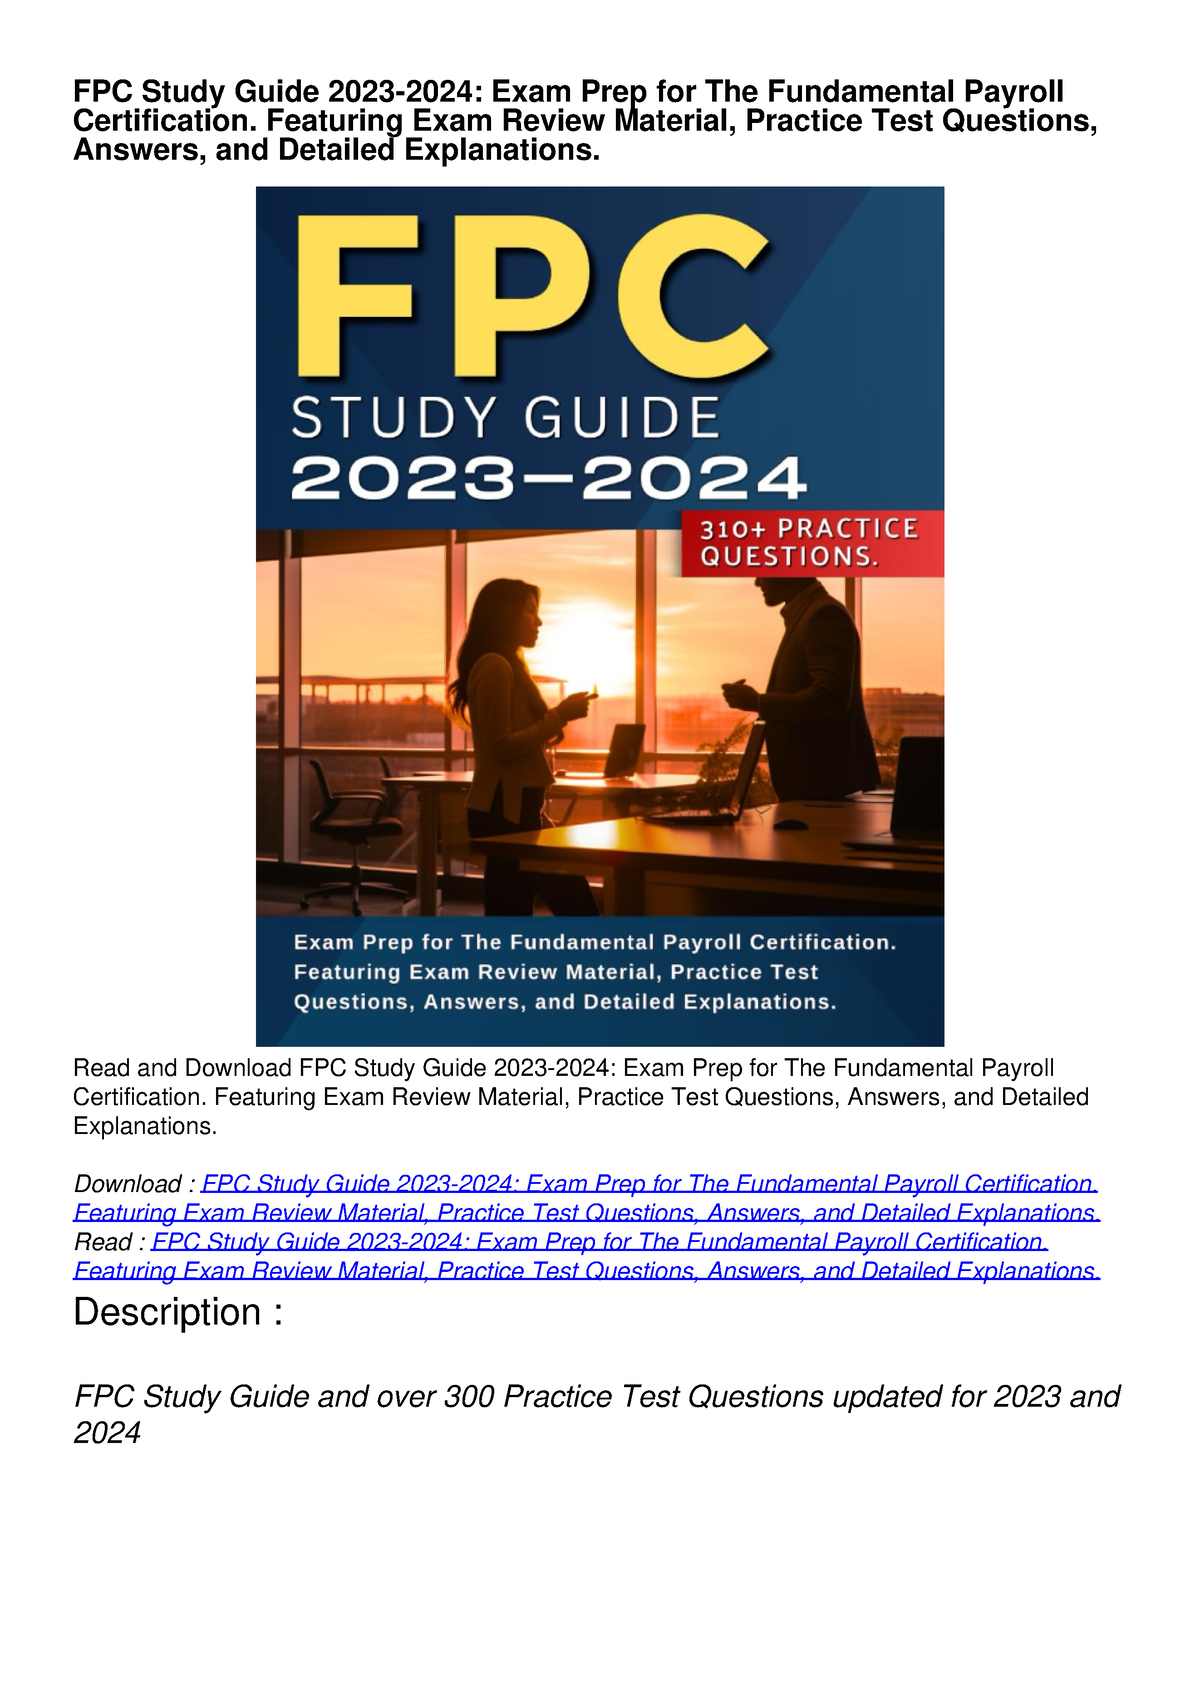 DOWNLOAD/PDF FPC Study Guide 2023 2024: Exam Prep for The Fundamental